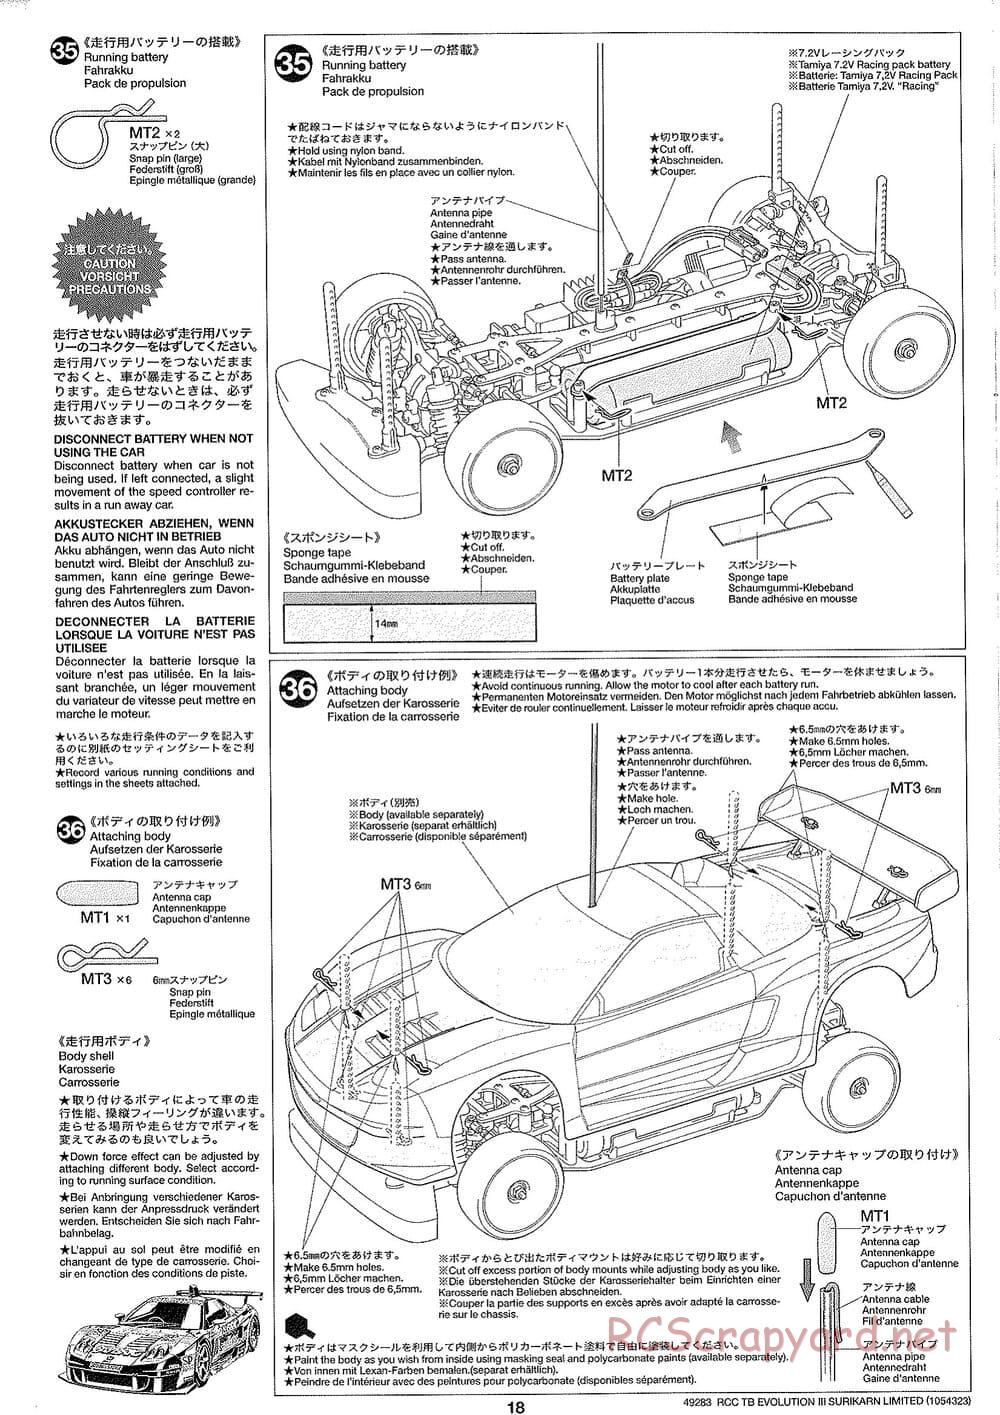 Tamiya - TB Evolution III Surikarn Limited Chassis - Manual - Page 18